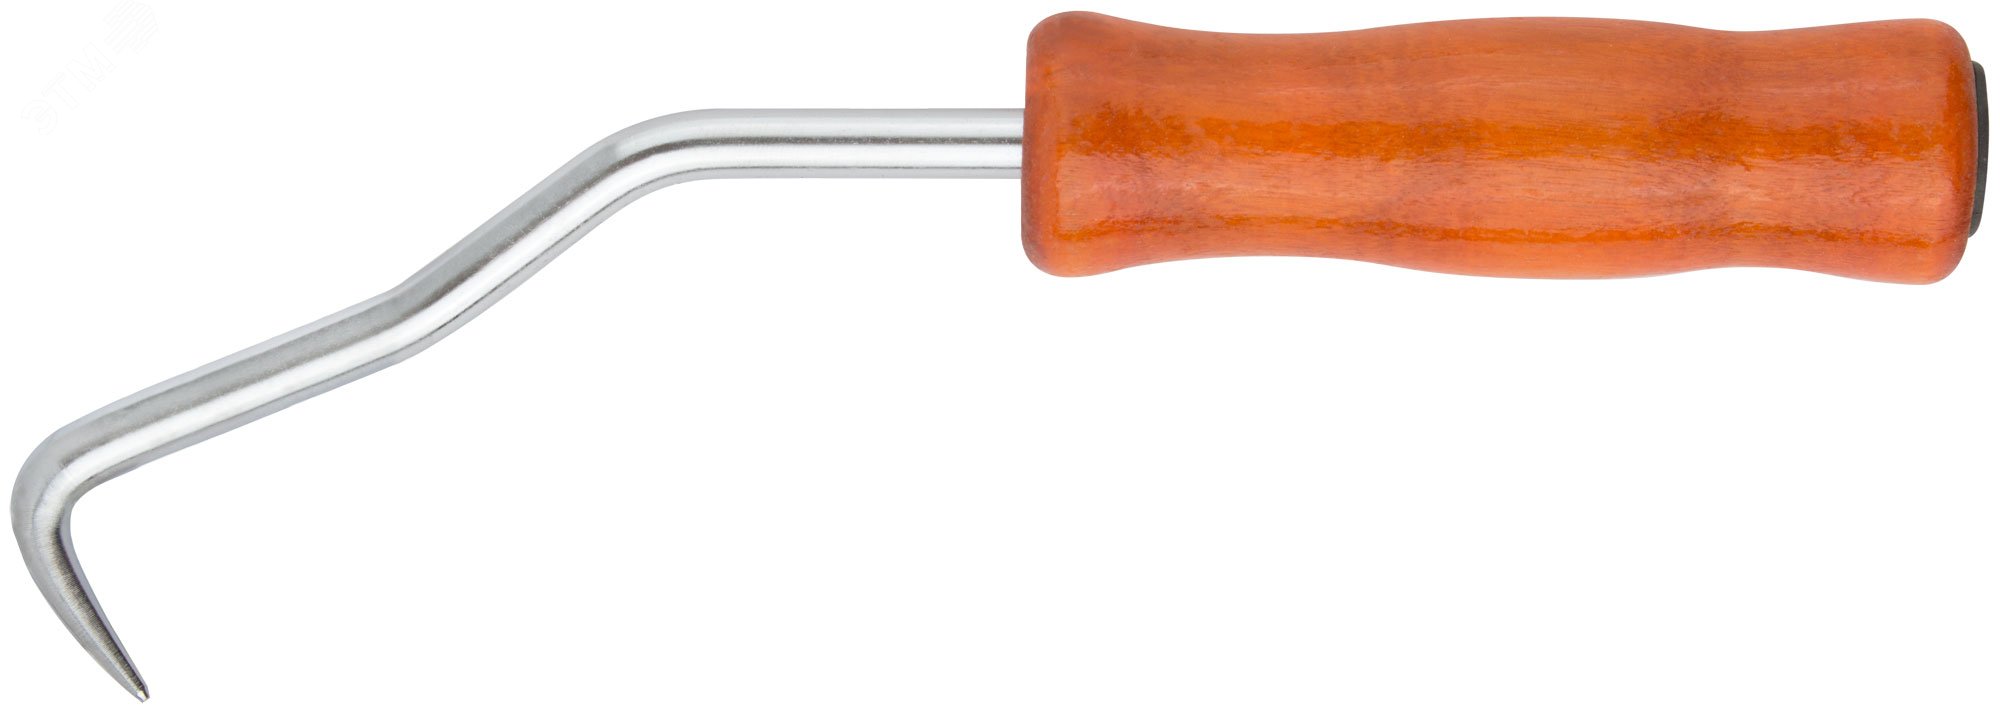 Крюк для вязки арматуры, деревянная ручка 220 мм 68151 FIT - превью